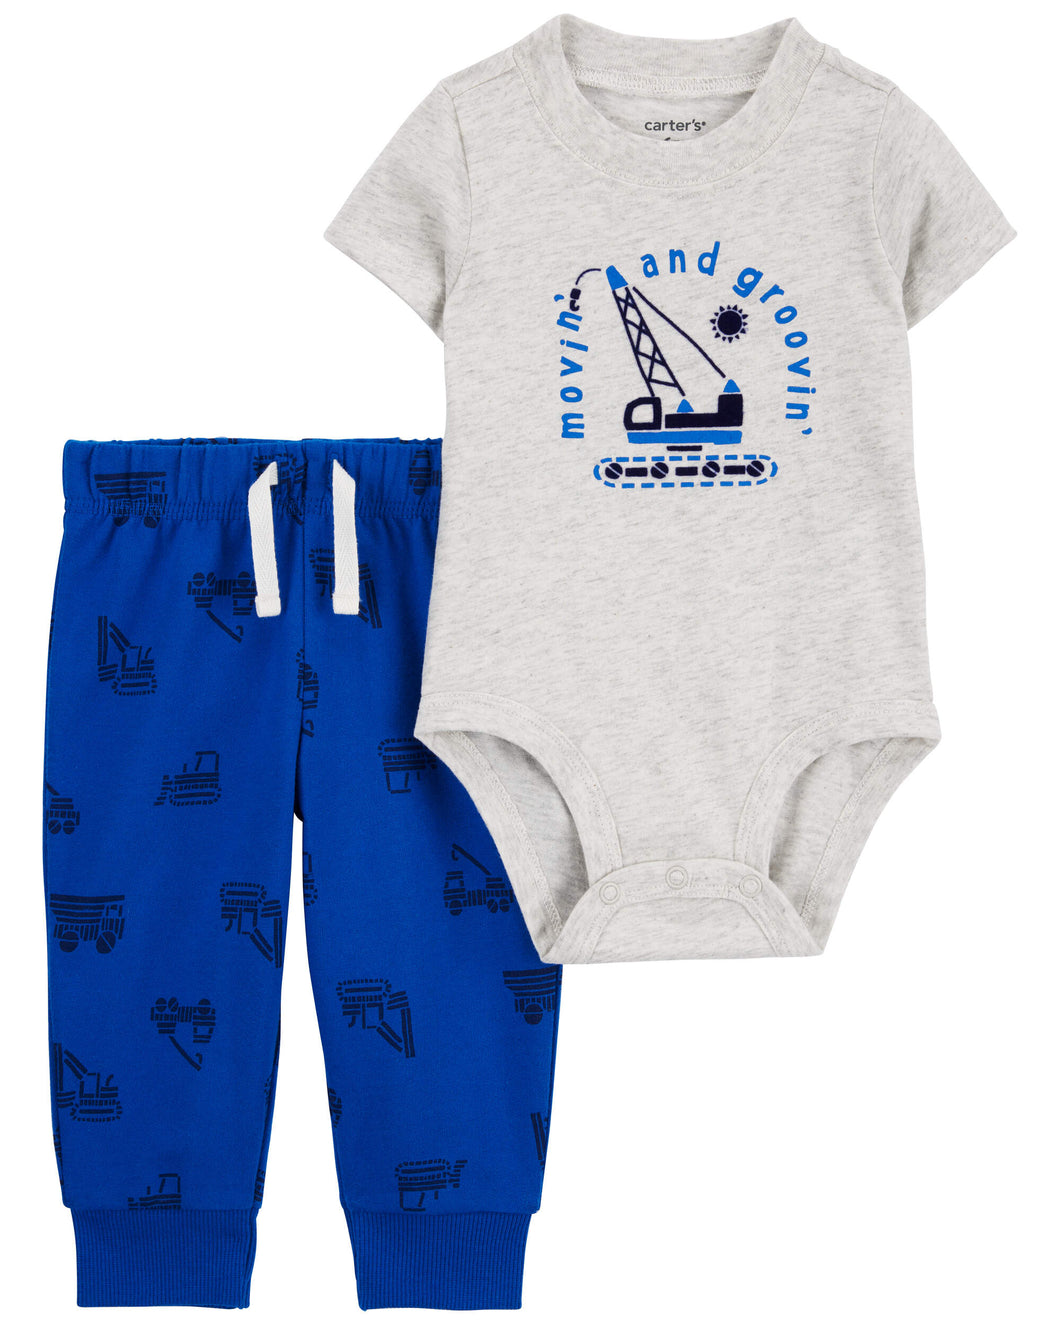 Carter's 2pc Baby Boy Grey Bodysuit and Blue Pants Set